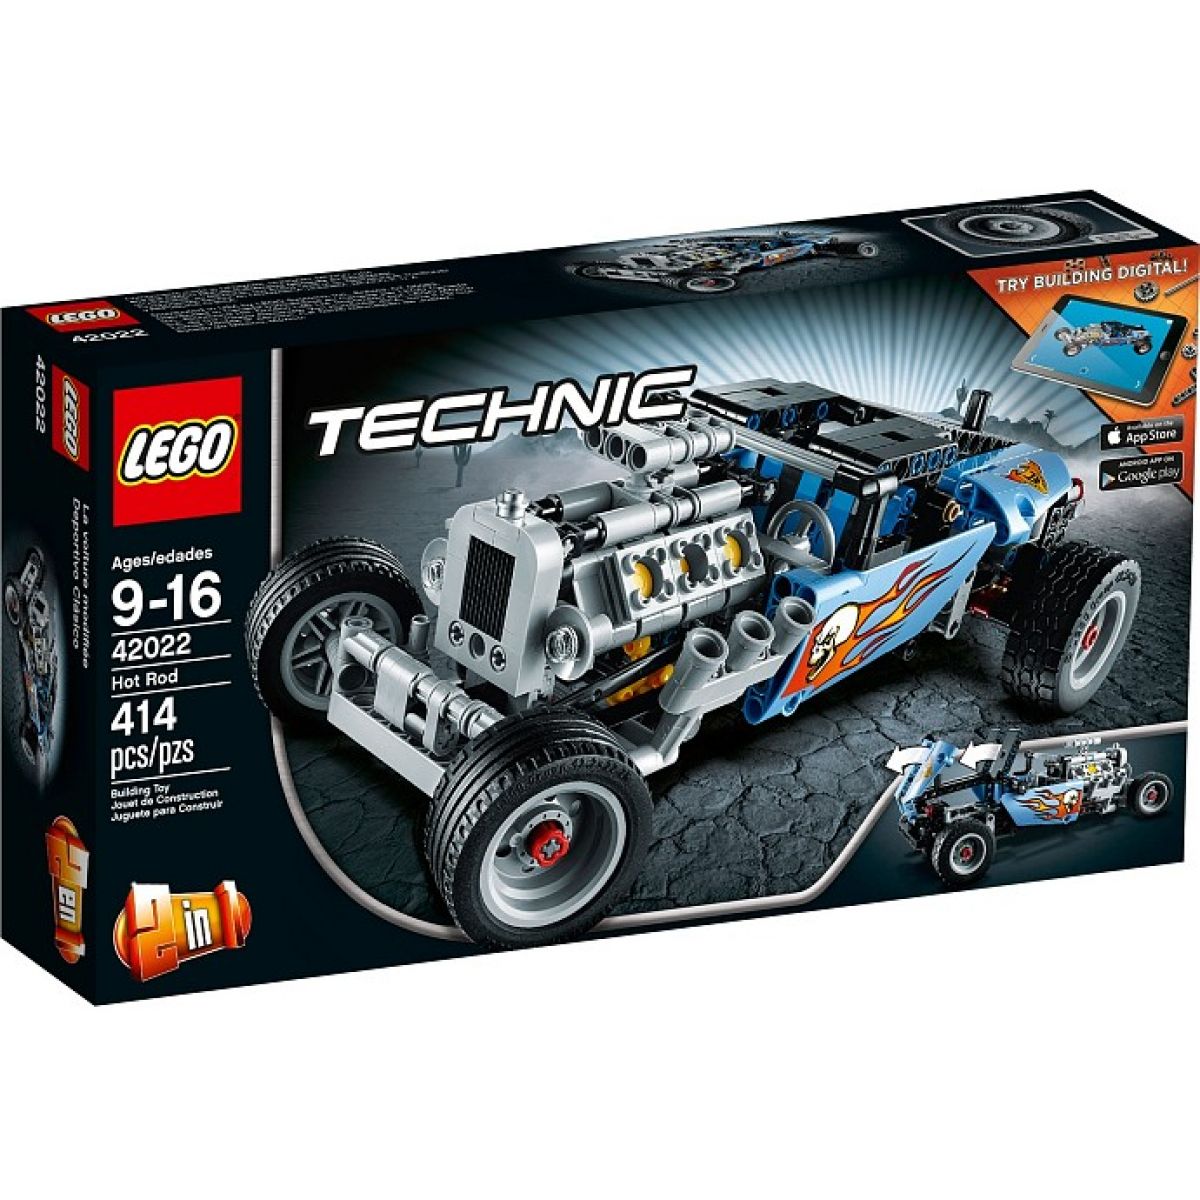 LEGO Technic 42022 - Hot Rod